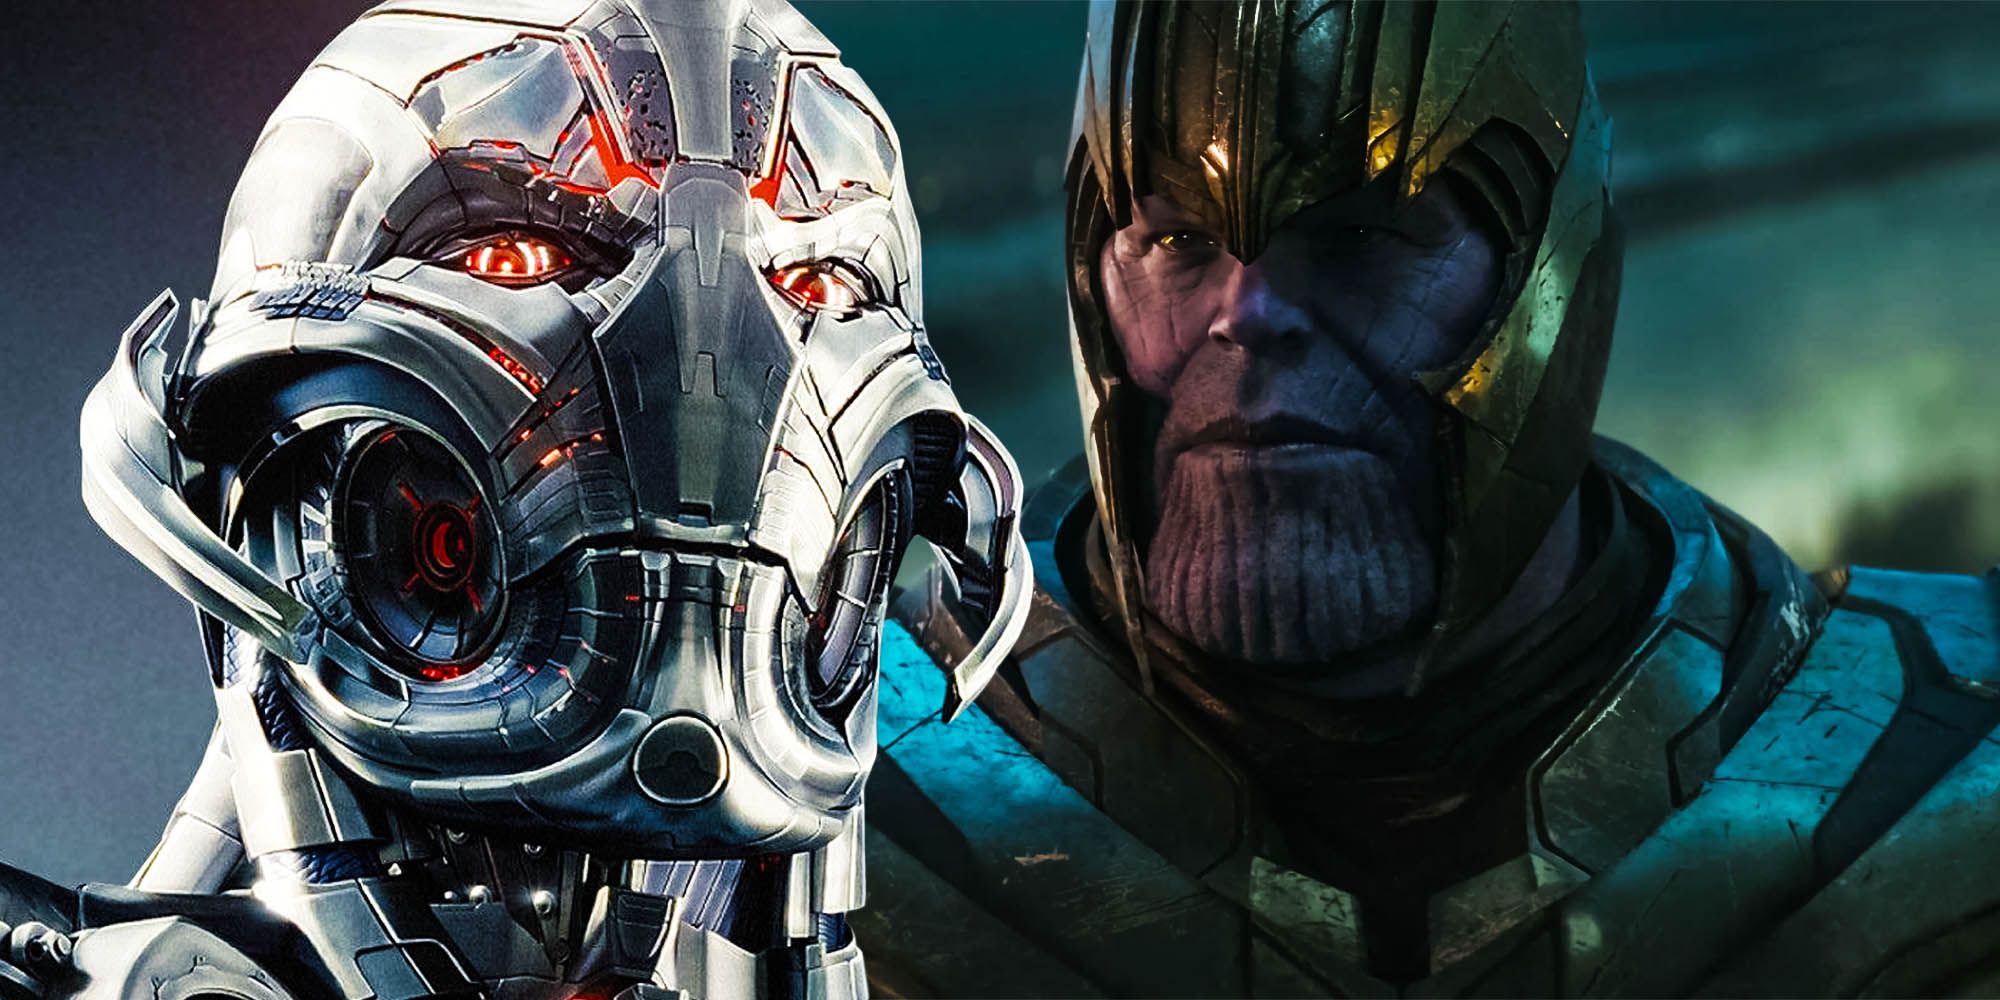 Is Thanos worse than Ultron?